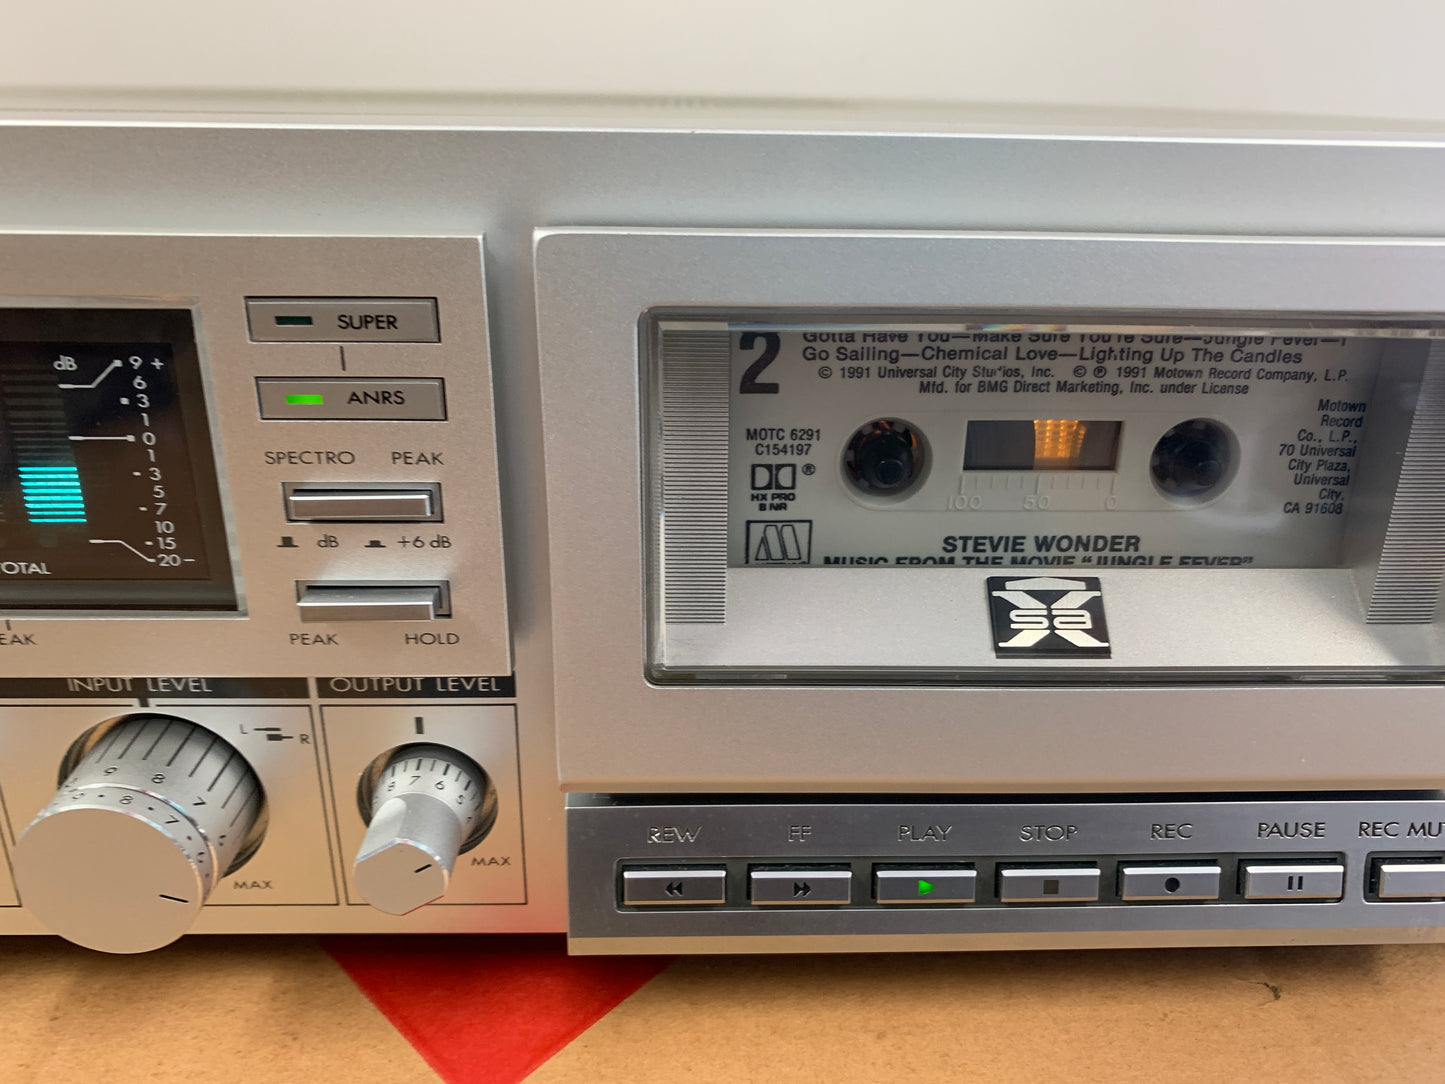 JVC KD-A7 Single Cassette Deck * Box * Manual